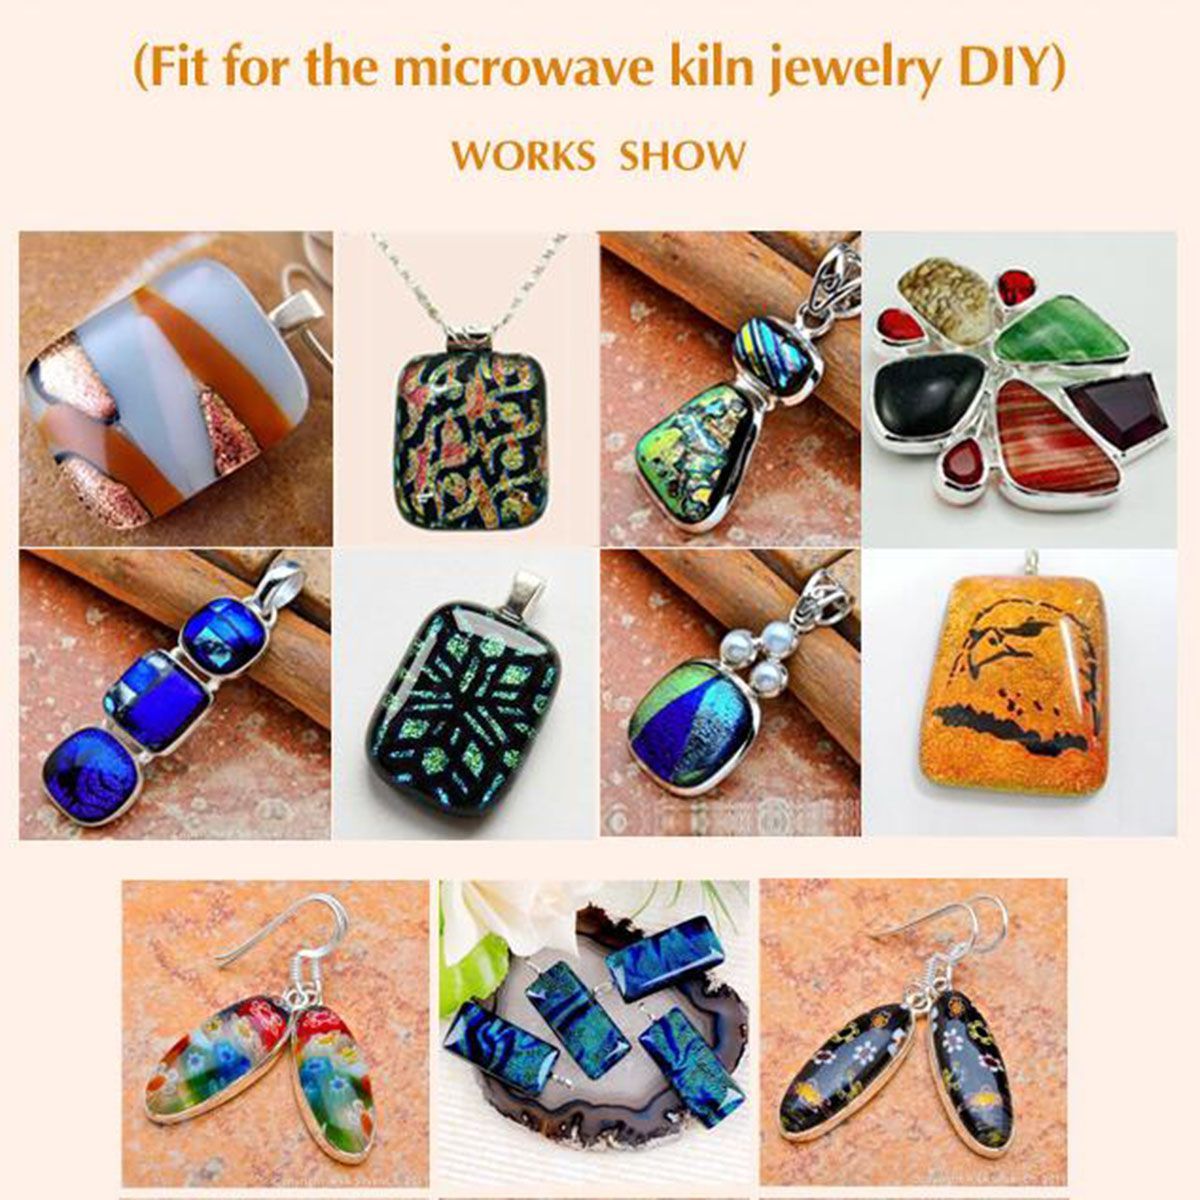 28g-90-COE-Fusible-Glass-Beads-Rainbow-Mix-Handmade-Millefiori-for-Mosaic-Decorations-1563193